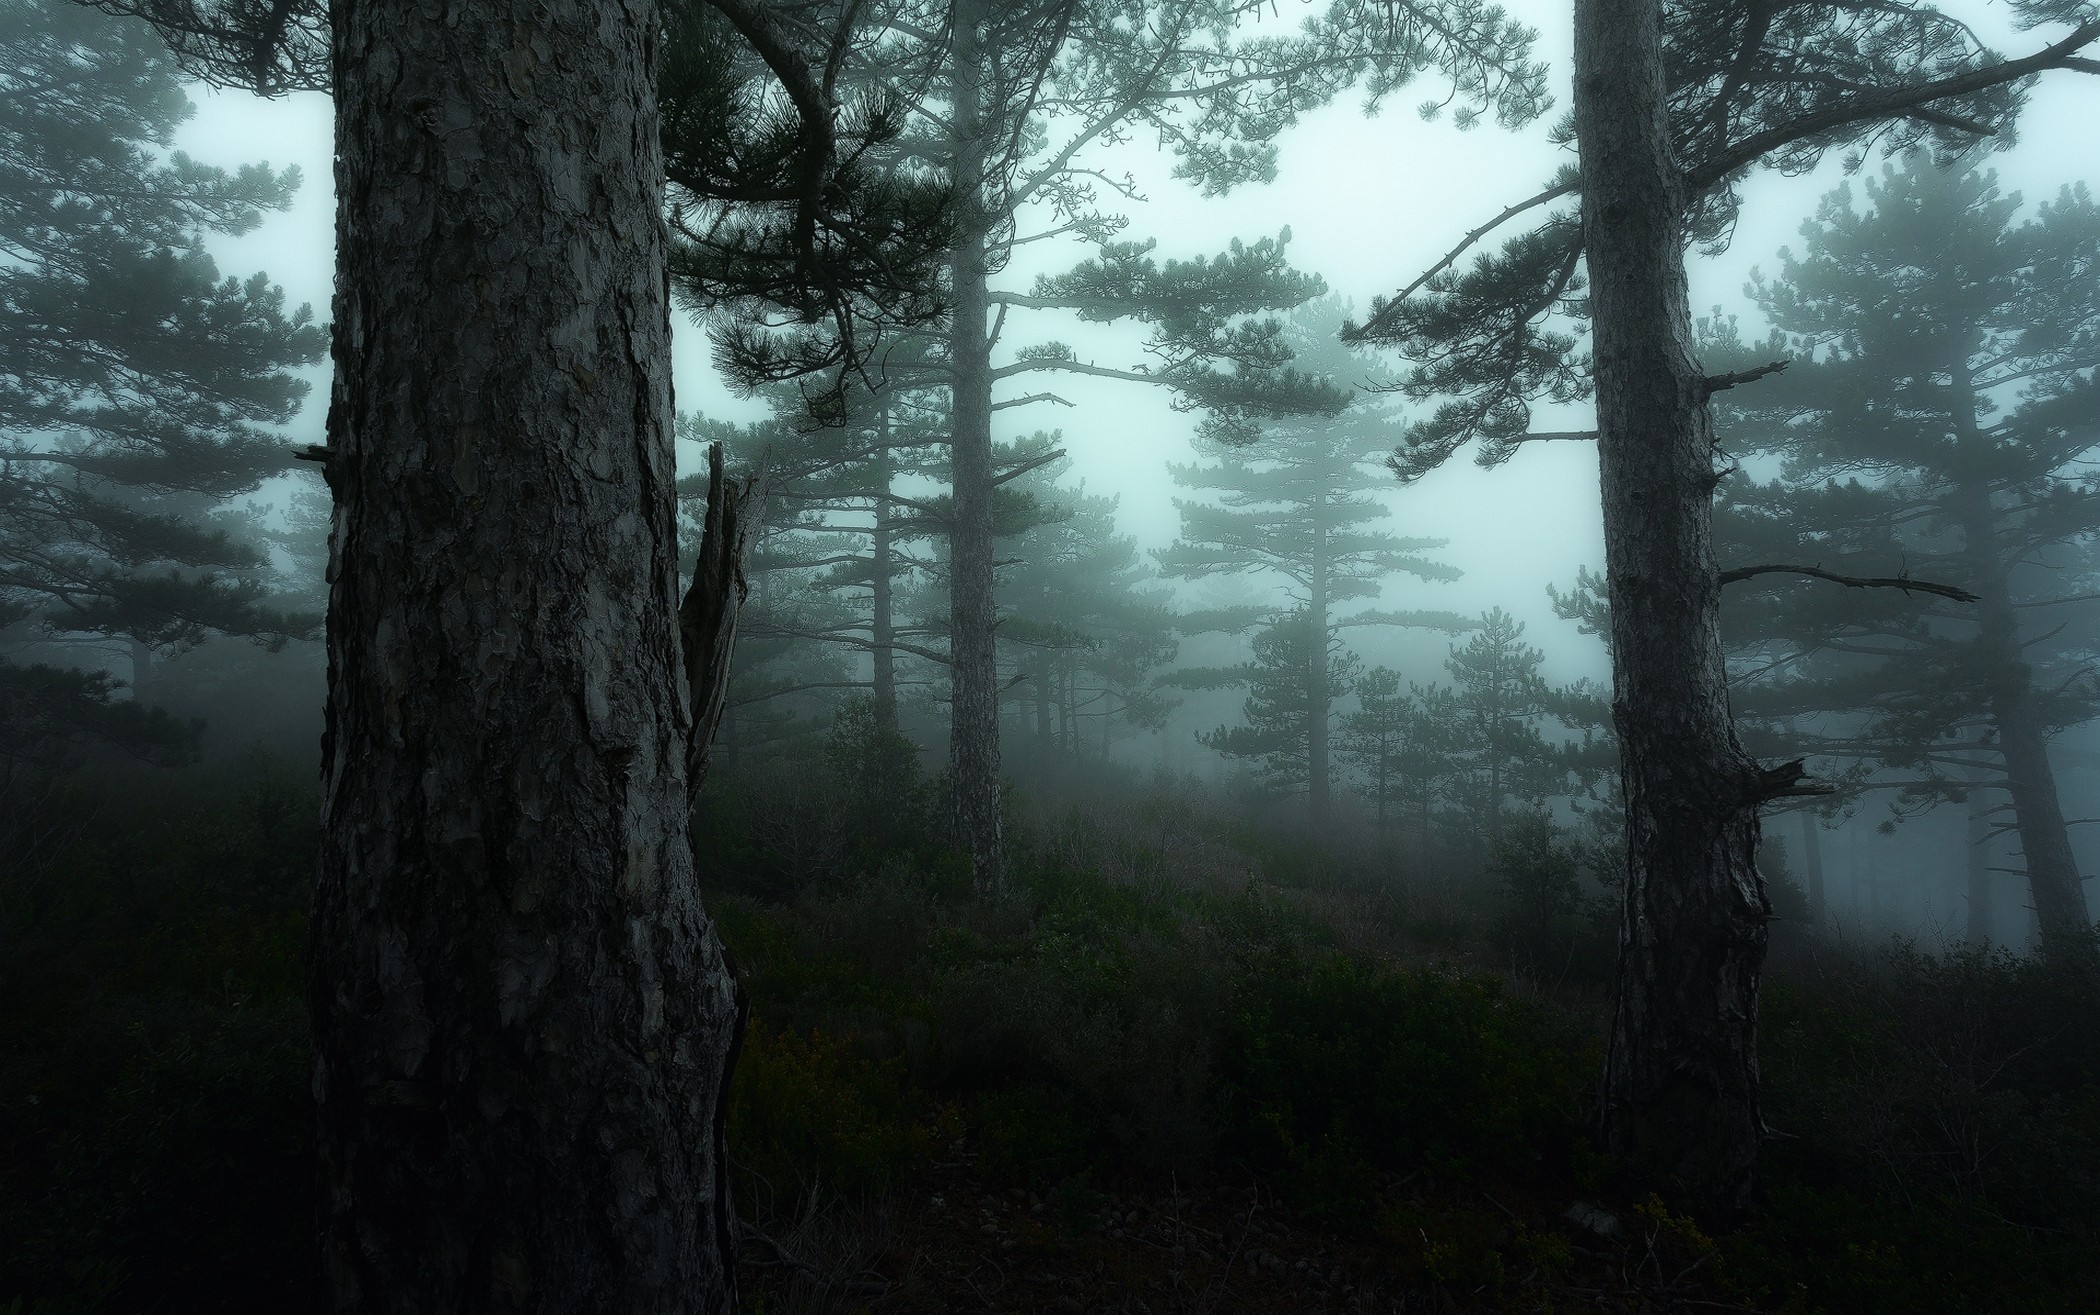 General 2100x1315 nature landscape mist morning dark trees shrubs forest hills atmosphere pine trees